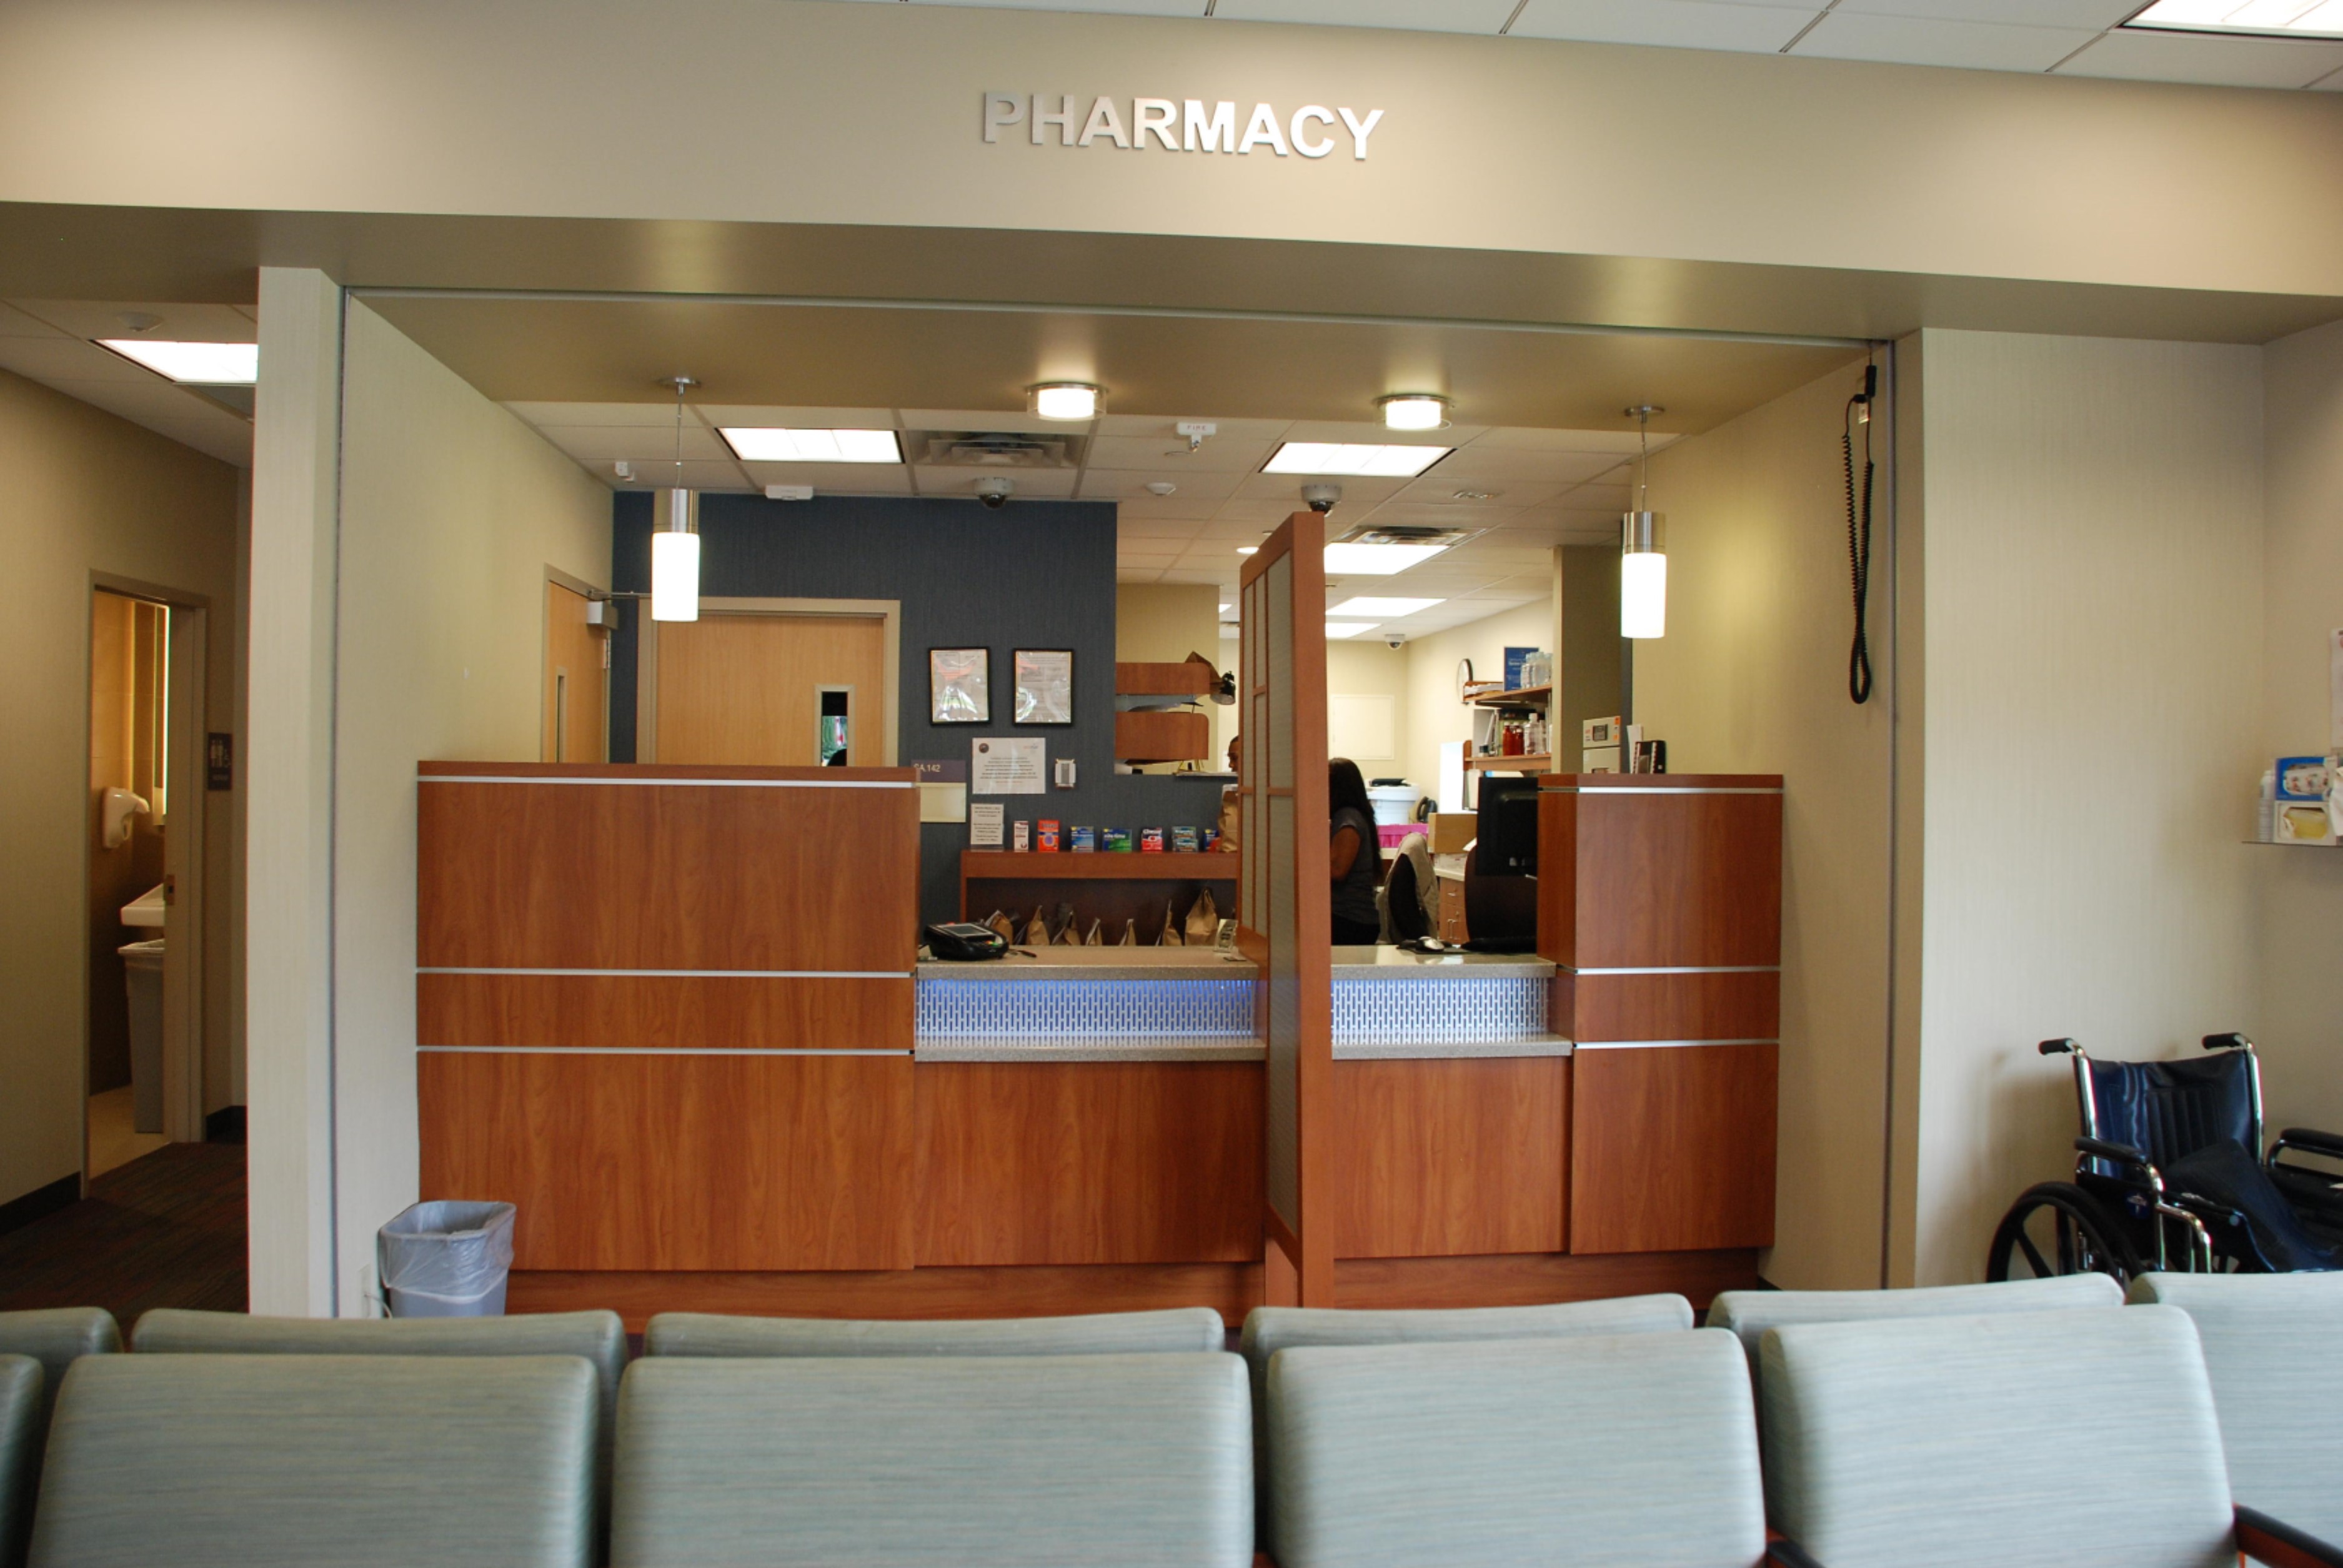 st anthony medical center family medicine pharmacy interior